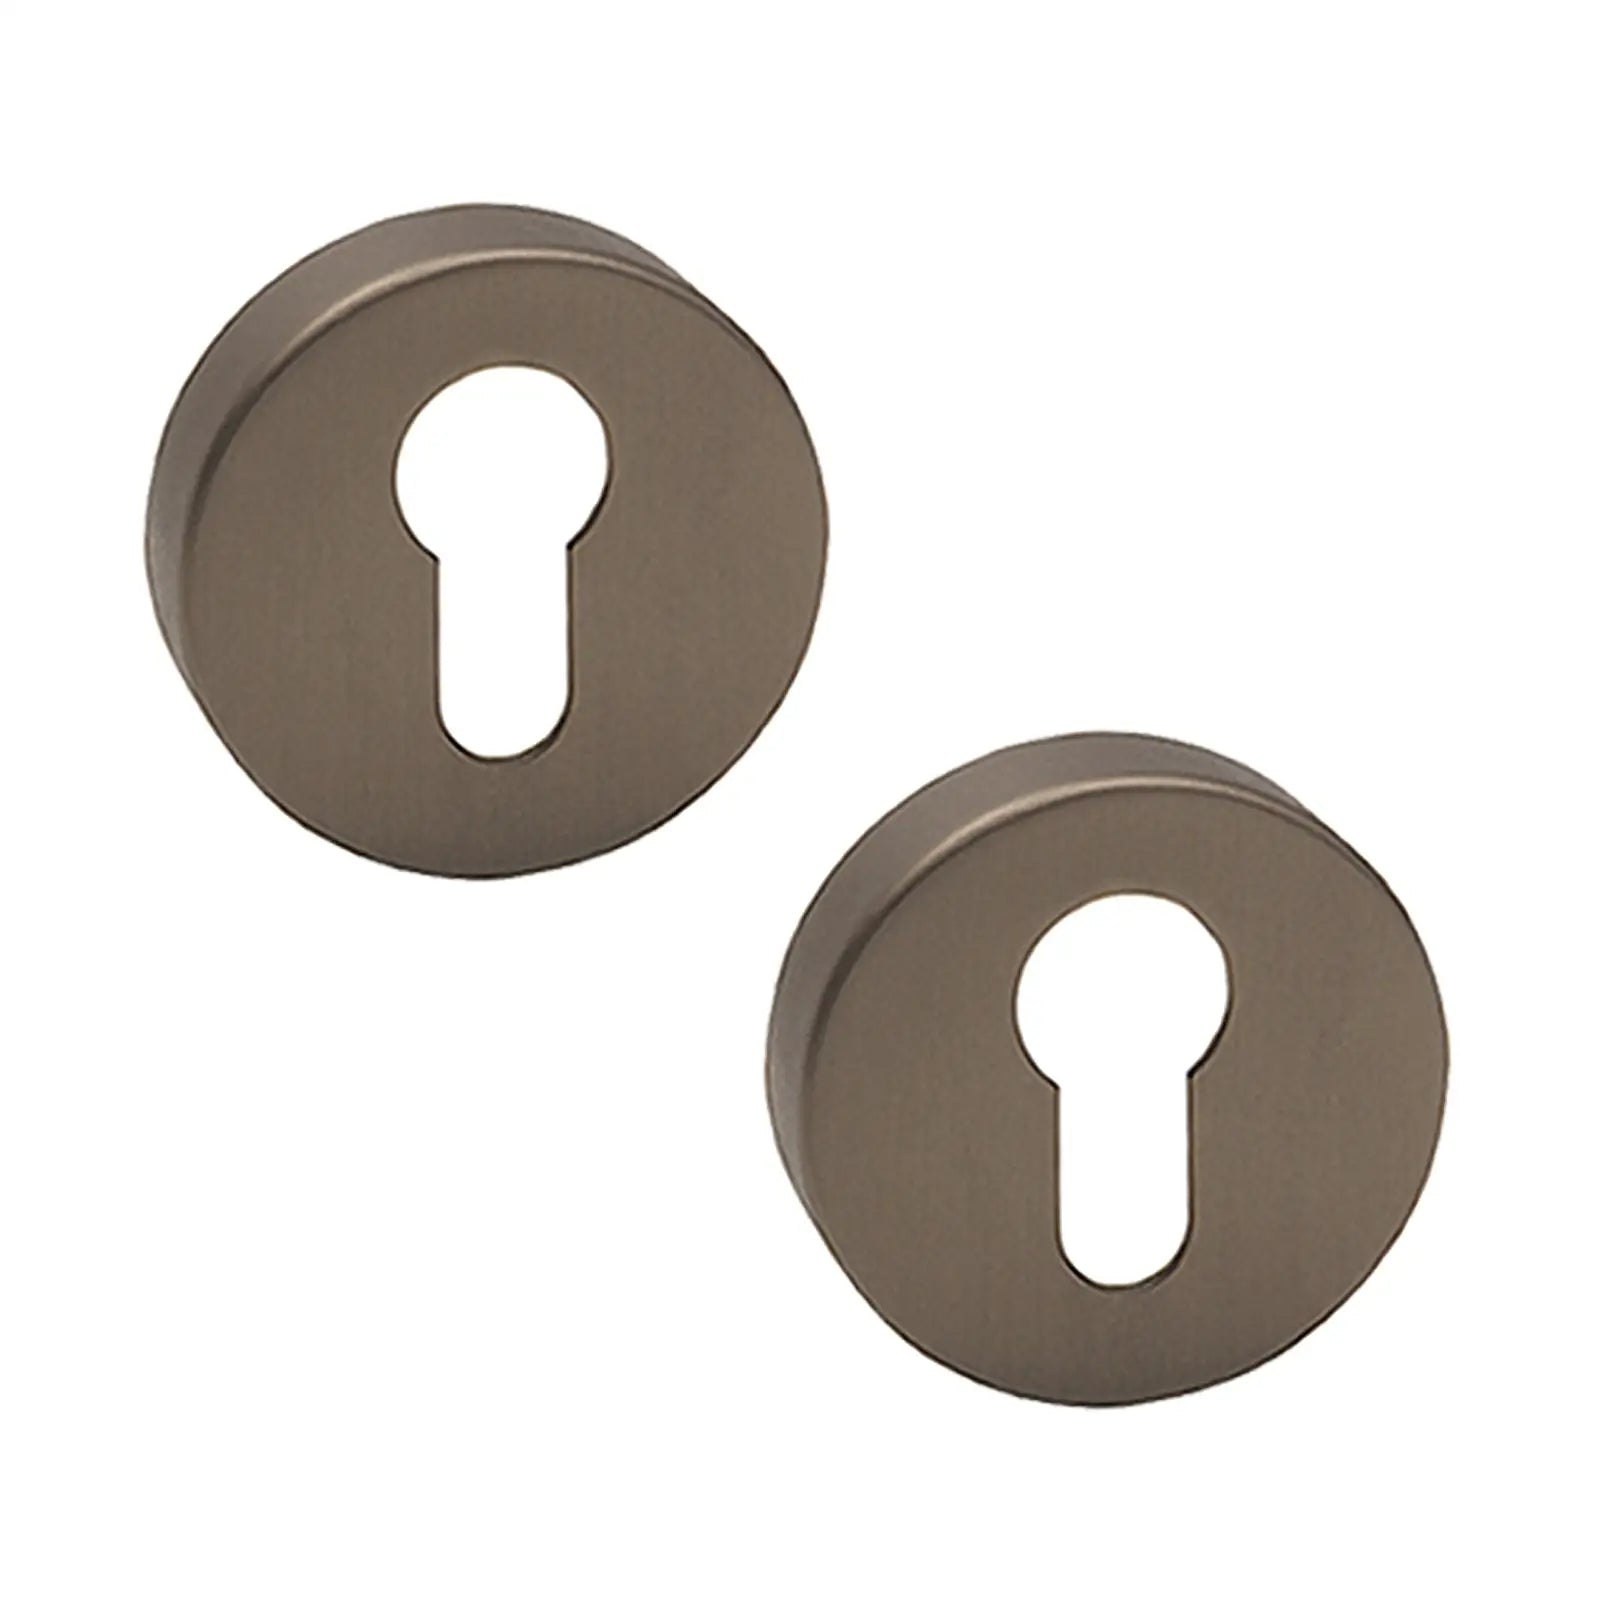 Euro Cylinder Keyhole Cover Escutcheon - Matt Bronze - Decor And Decor